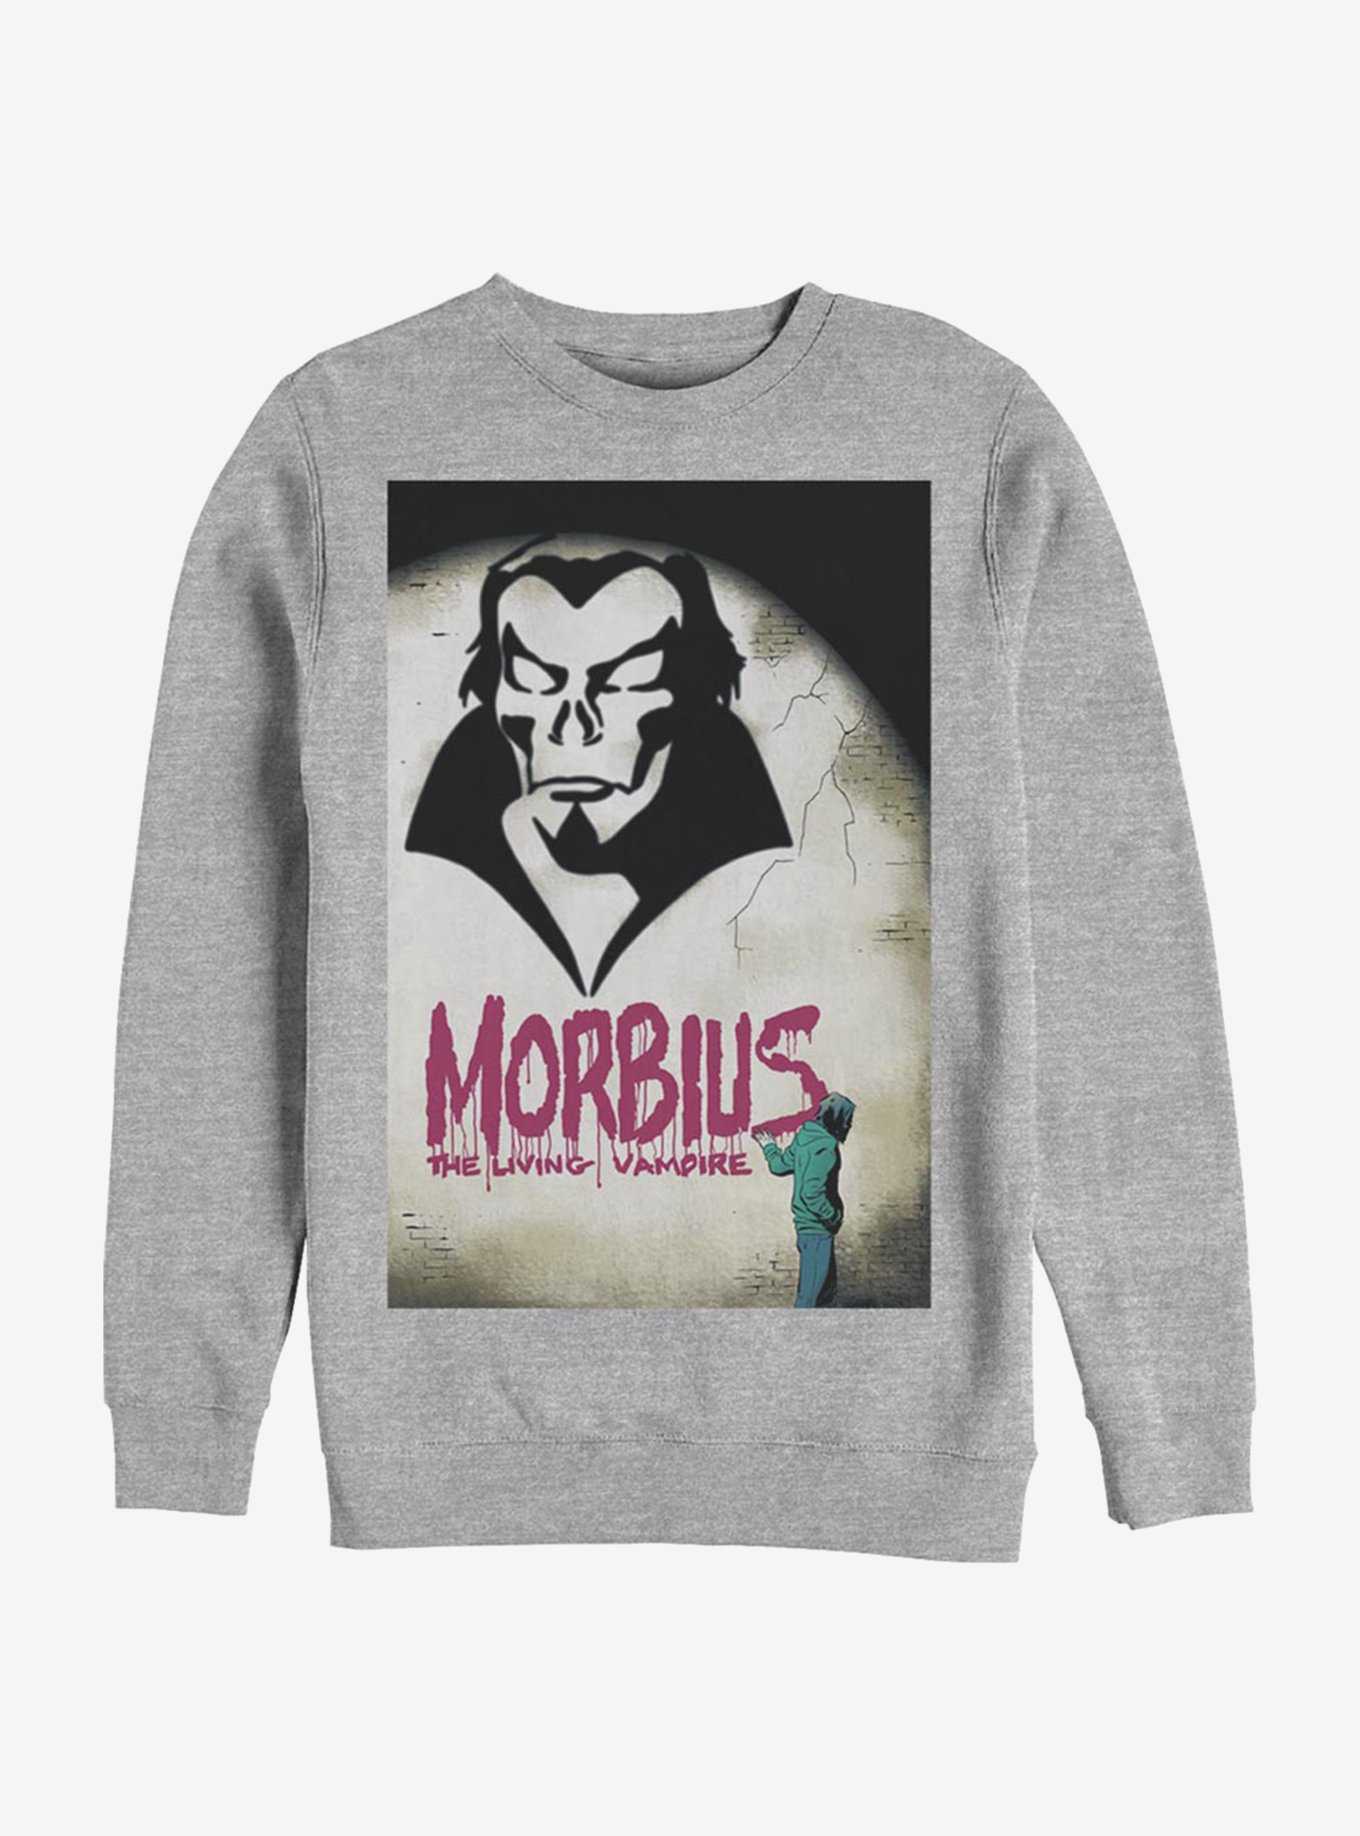 Marvel Morbius Spray Paint Cover Crew Sweatshirt, ATH HTR, hi-res